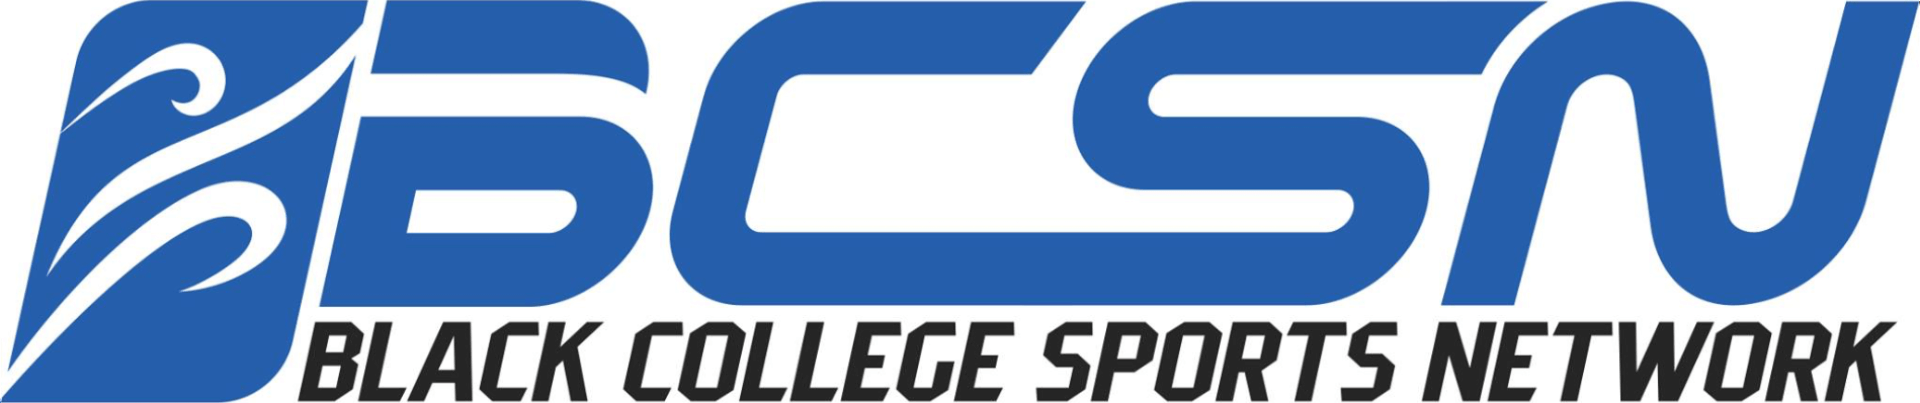 Black College Sports Network Logo